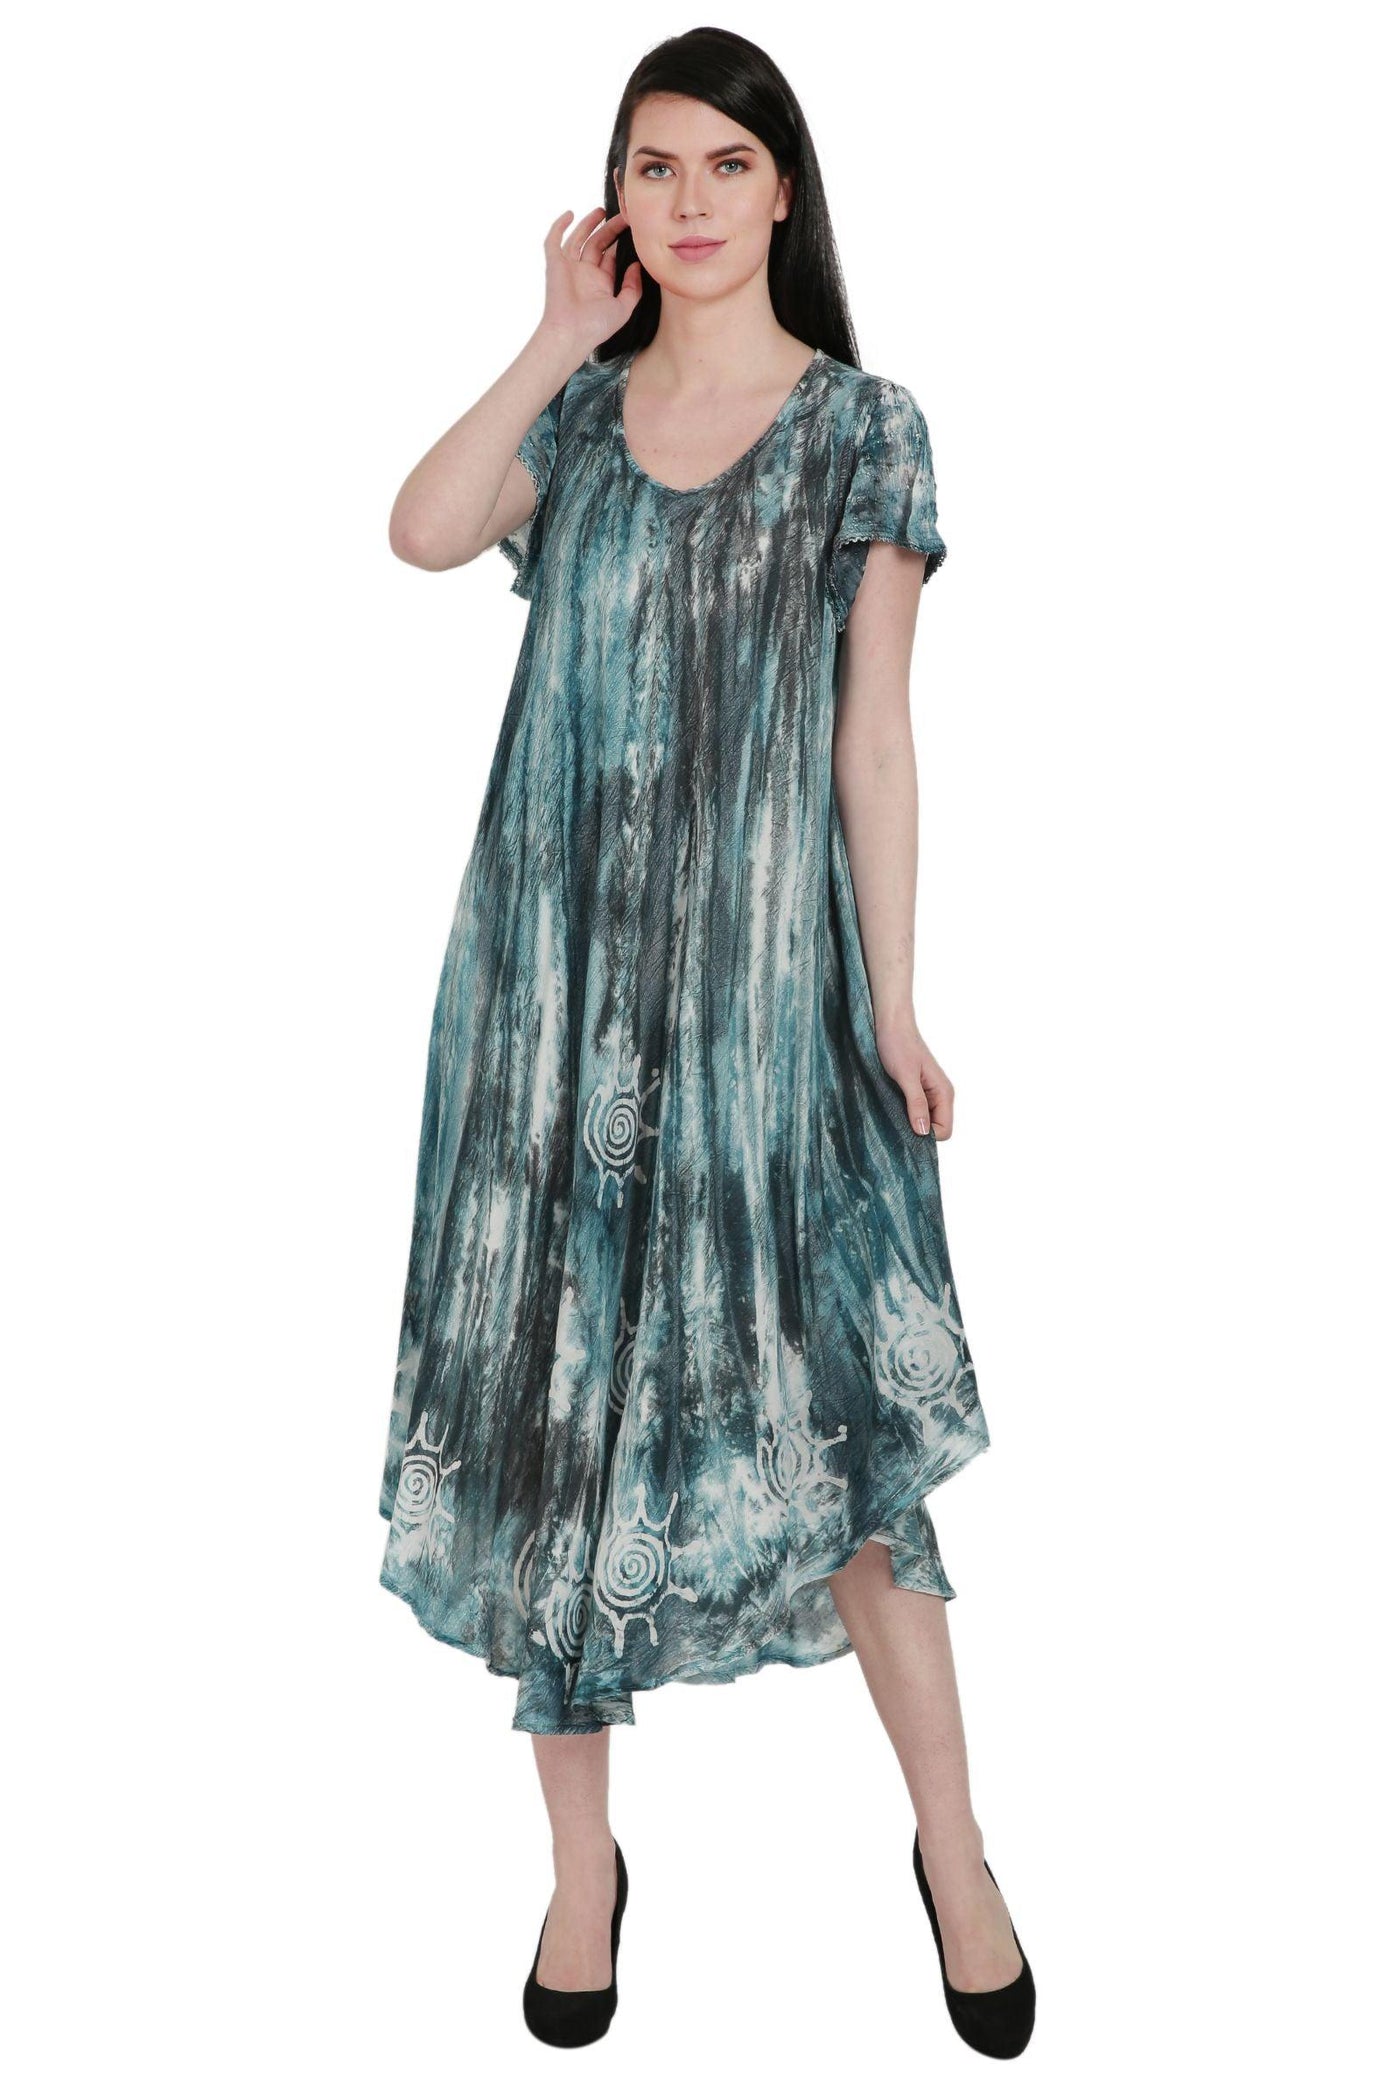 Batik + Tie Dye Trapeze Dress UDS52-2438  - Advance Apparels Inc